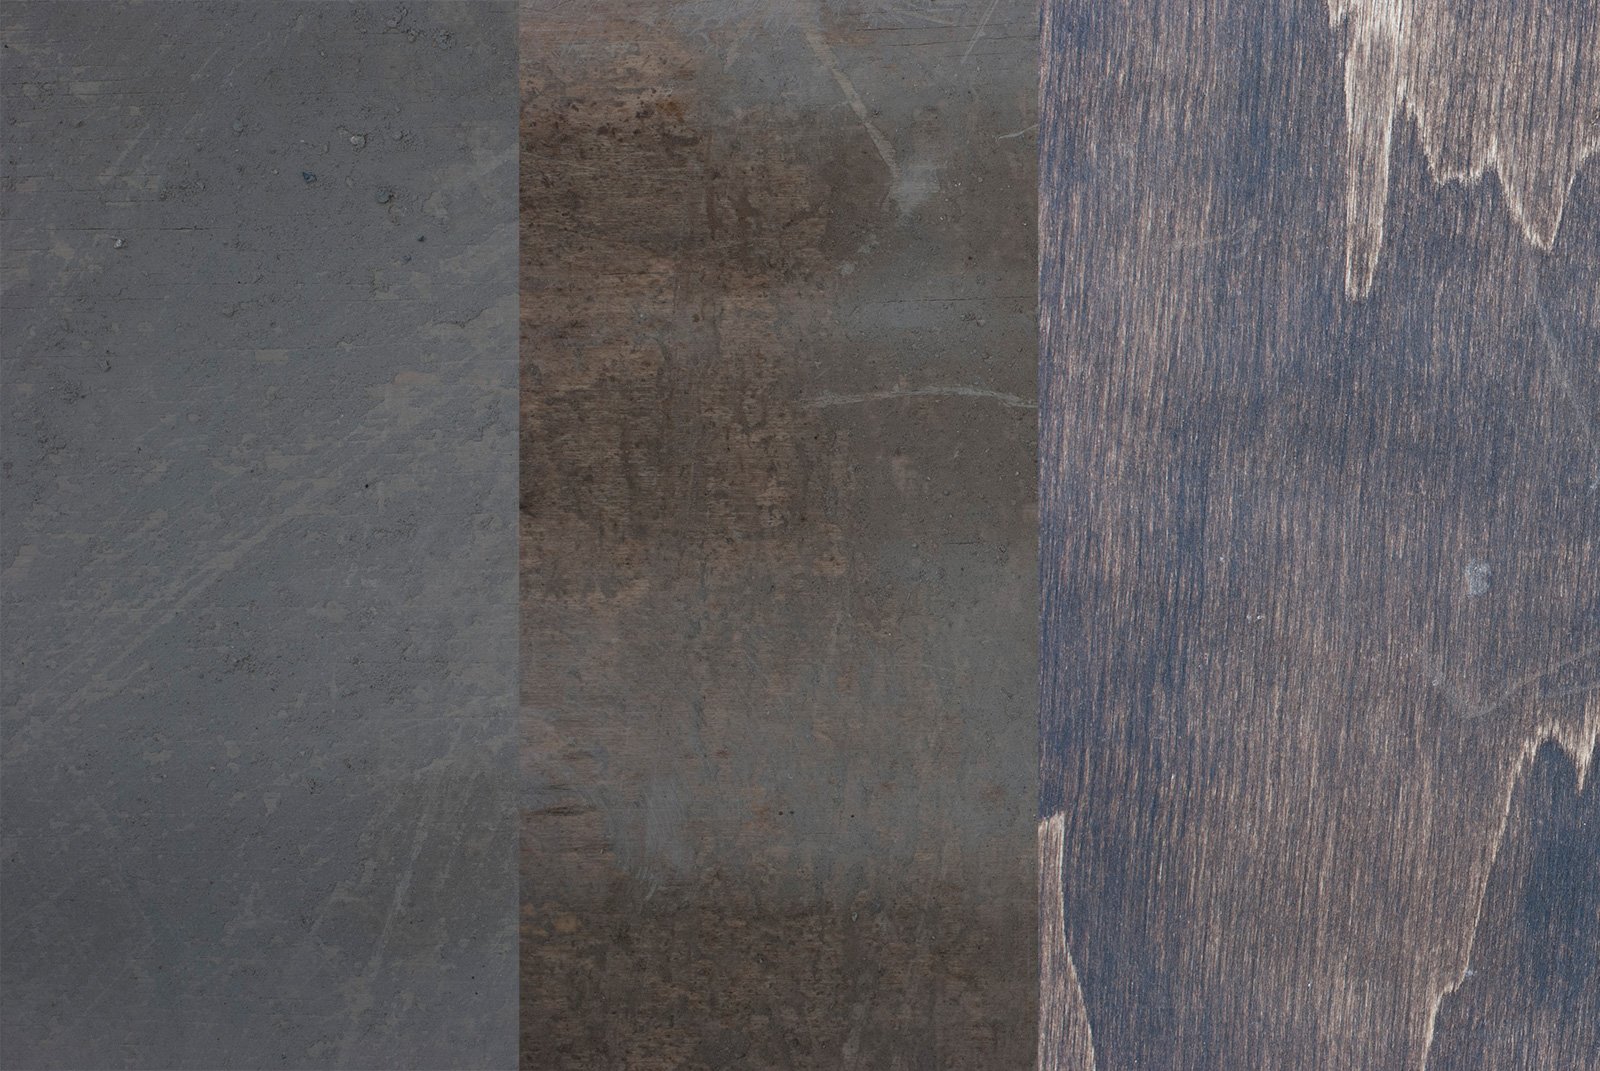 Wood Grain & Dirt Textures preview image.